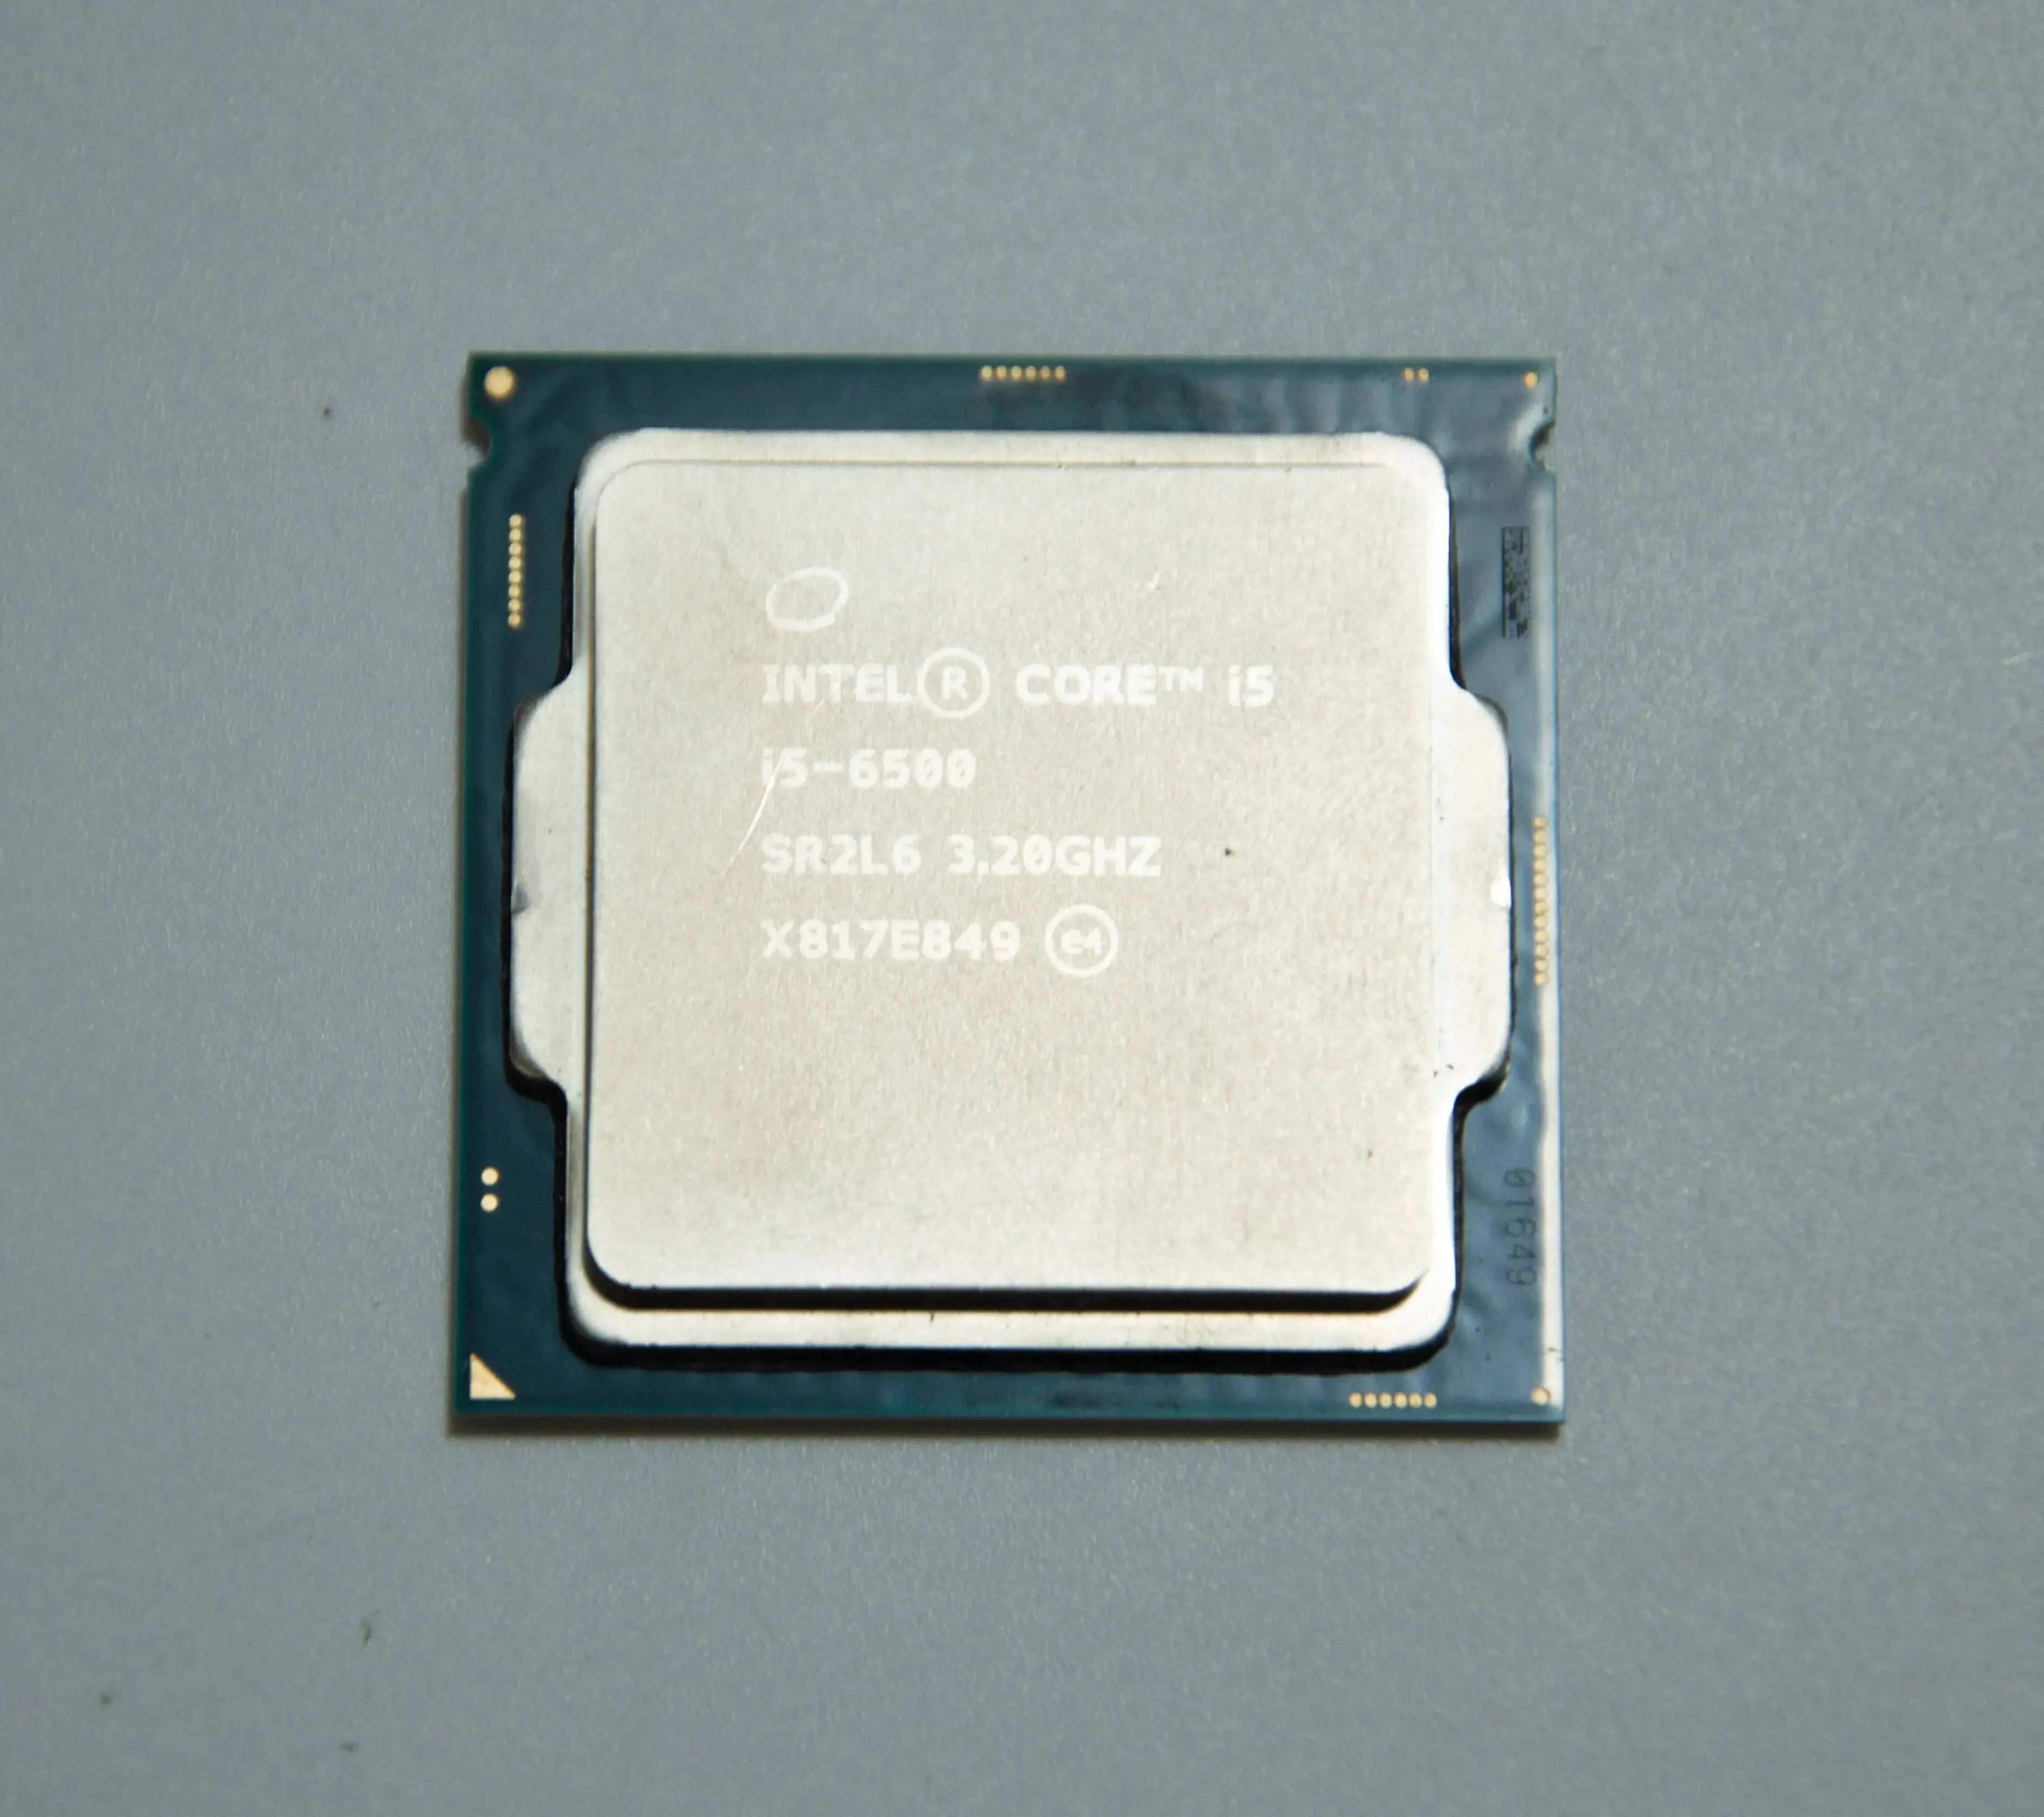 Intel Core i5-6500 lga1151, 4 x 3200 МГЦ цены. I5 6500 сокет